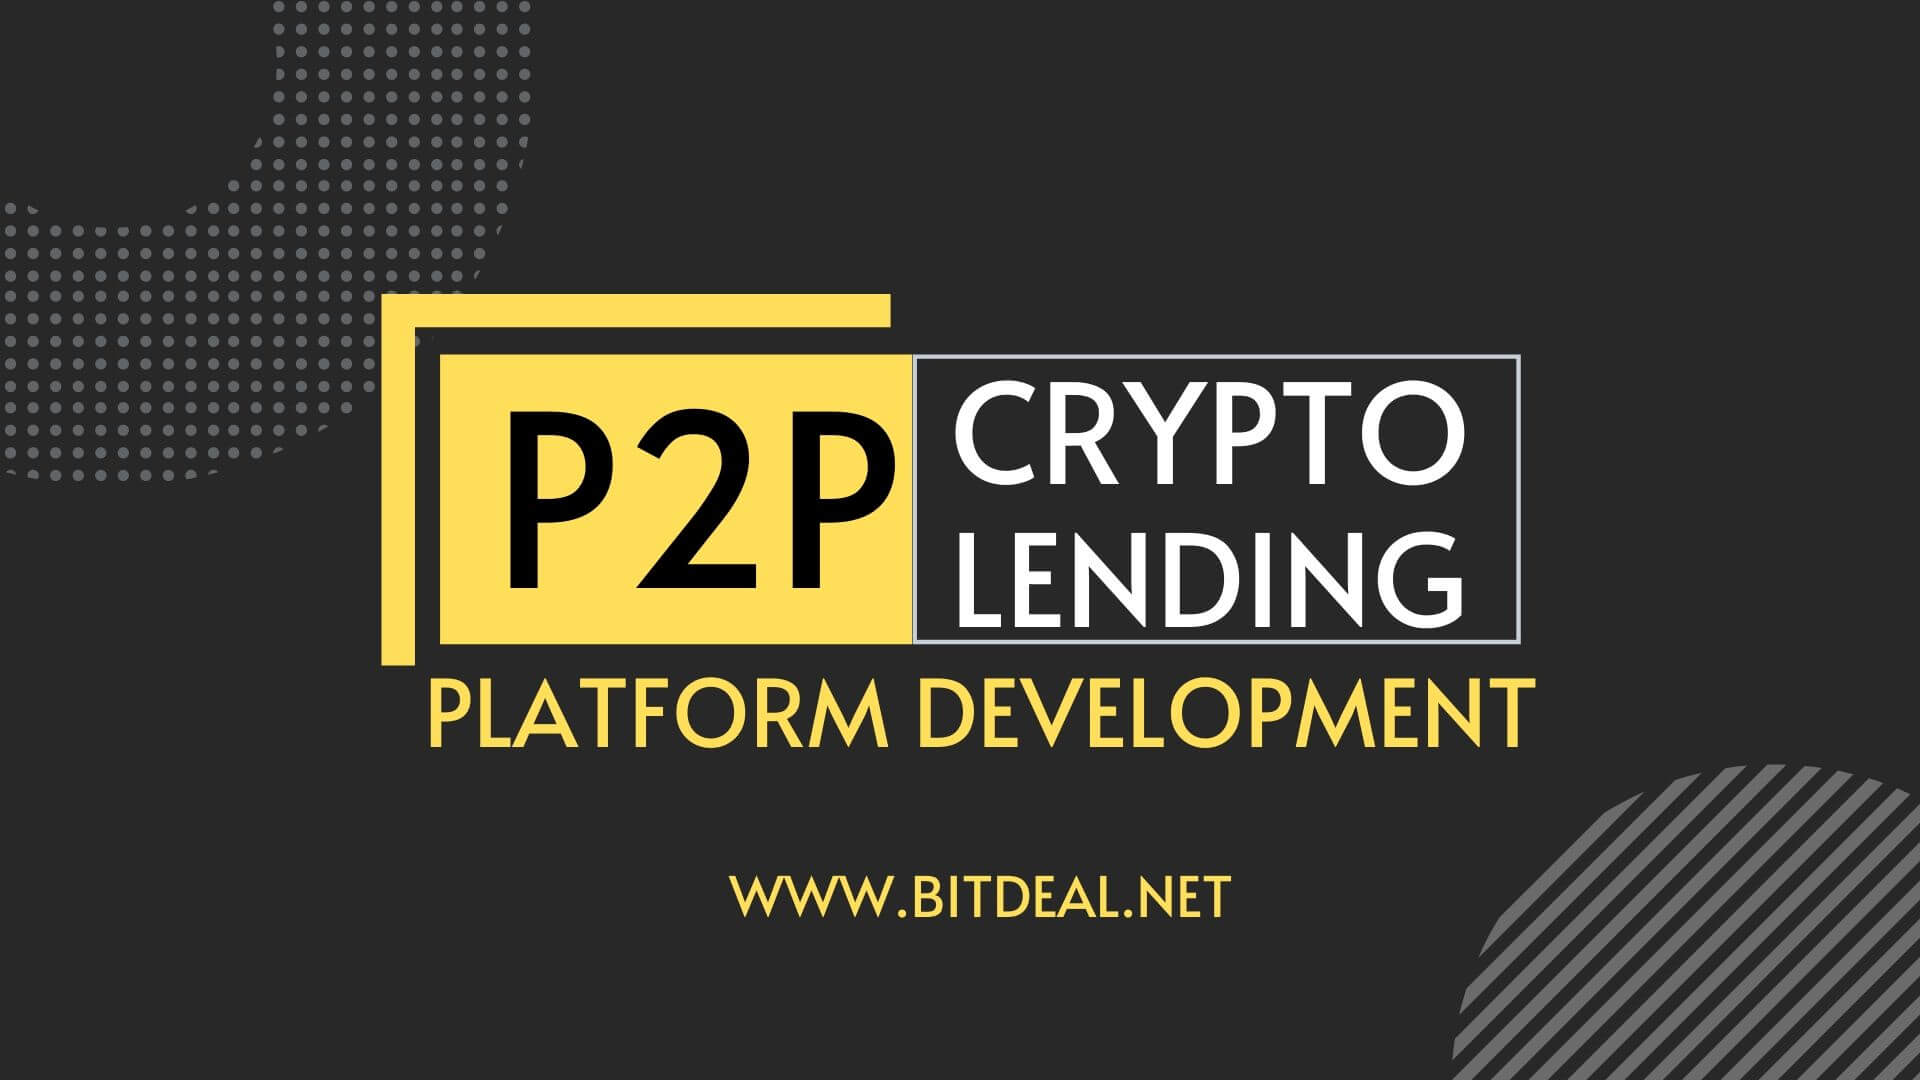 P2P Cryptocurrency Lending Platform Development Company